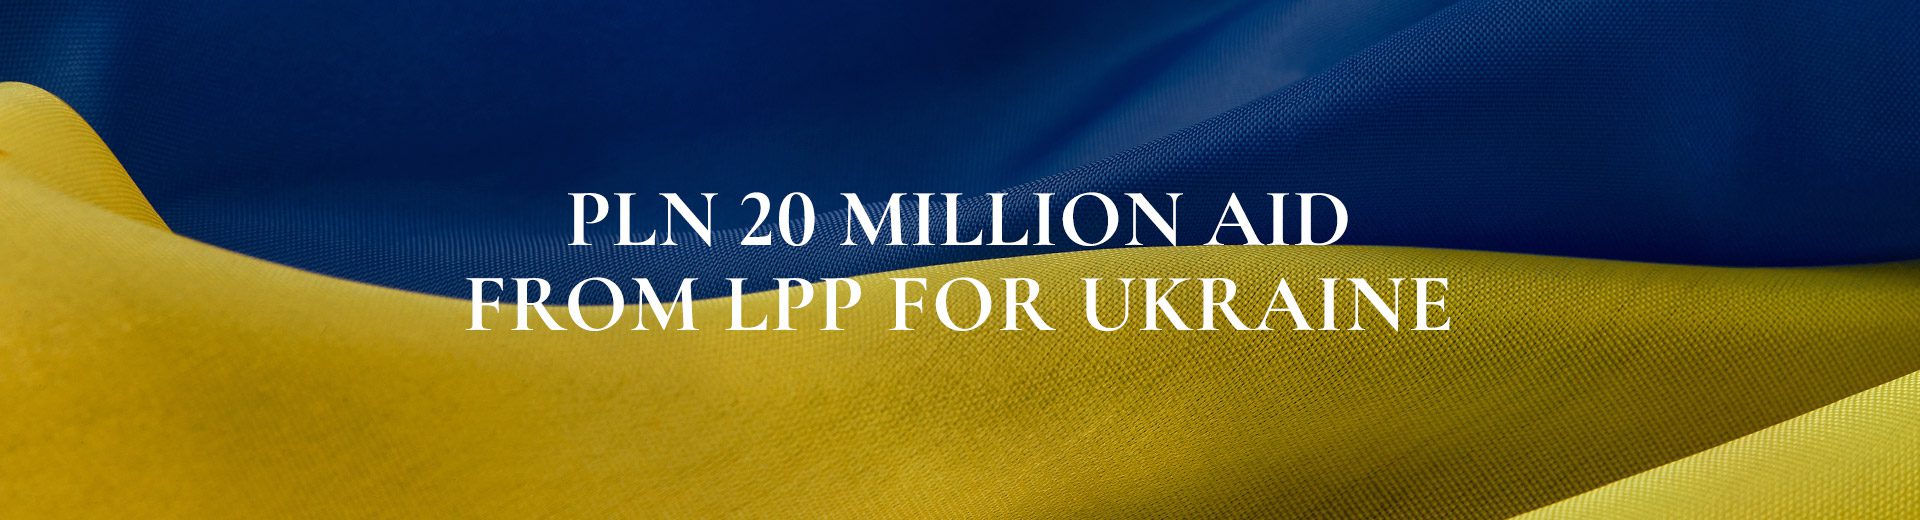 LPP for Ukraine